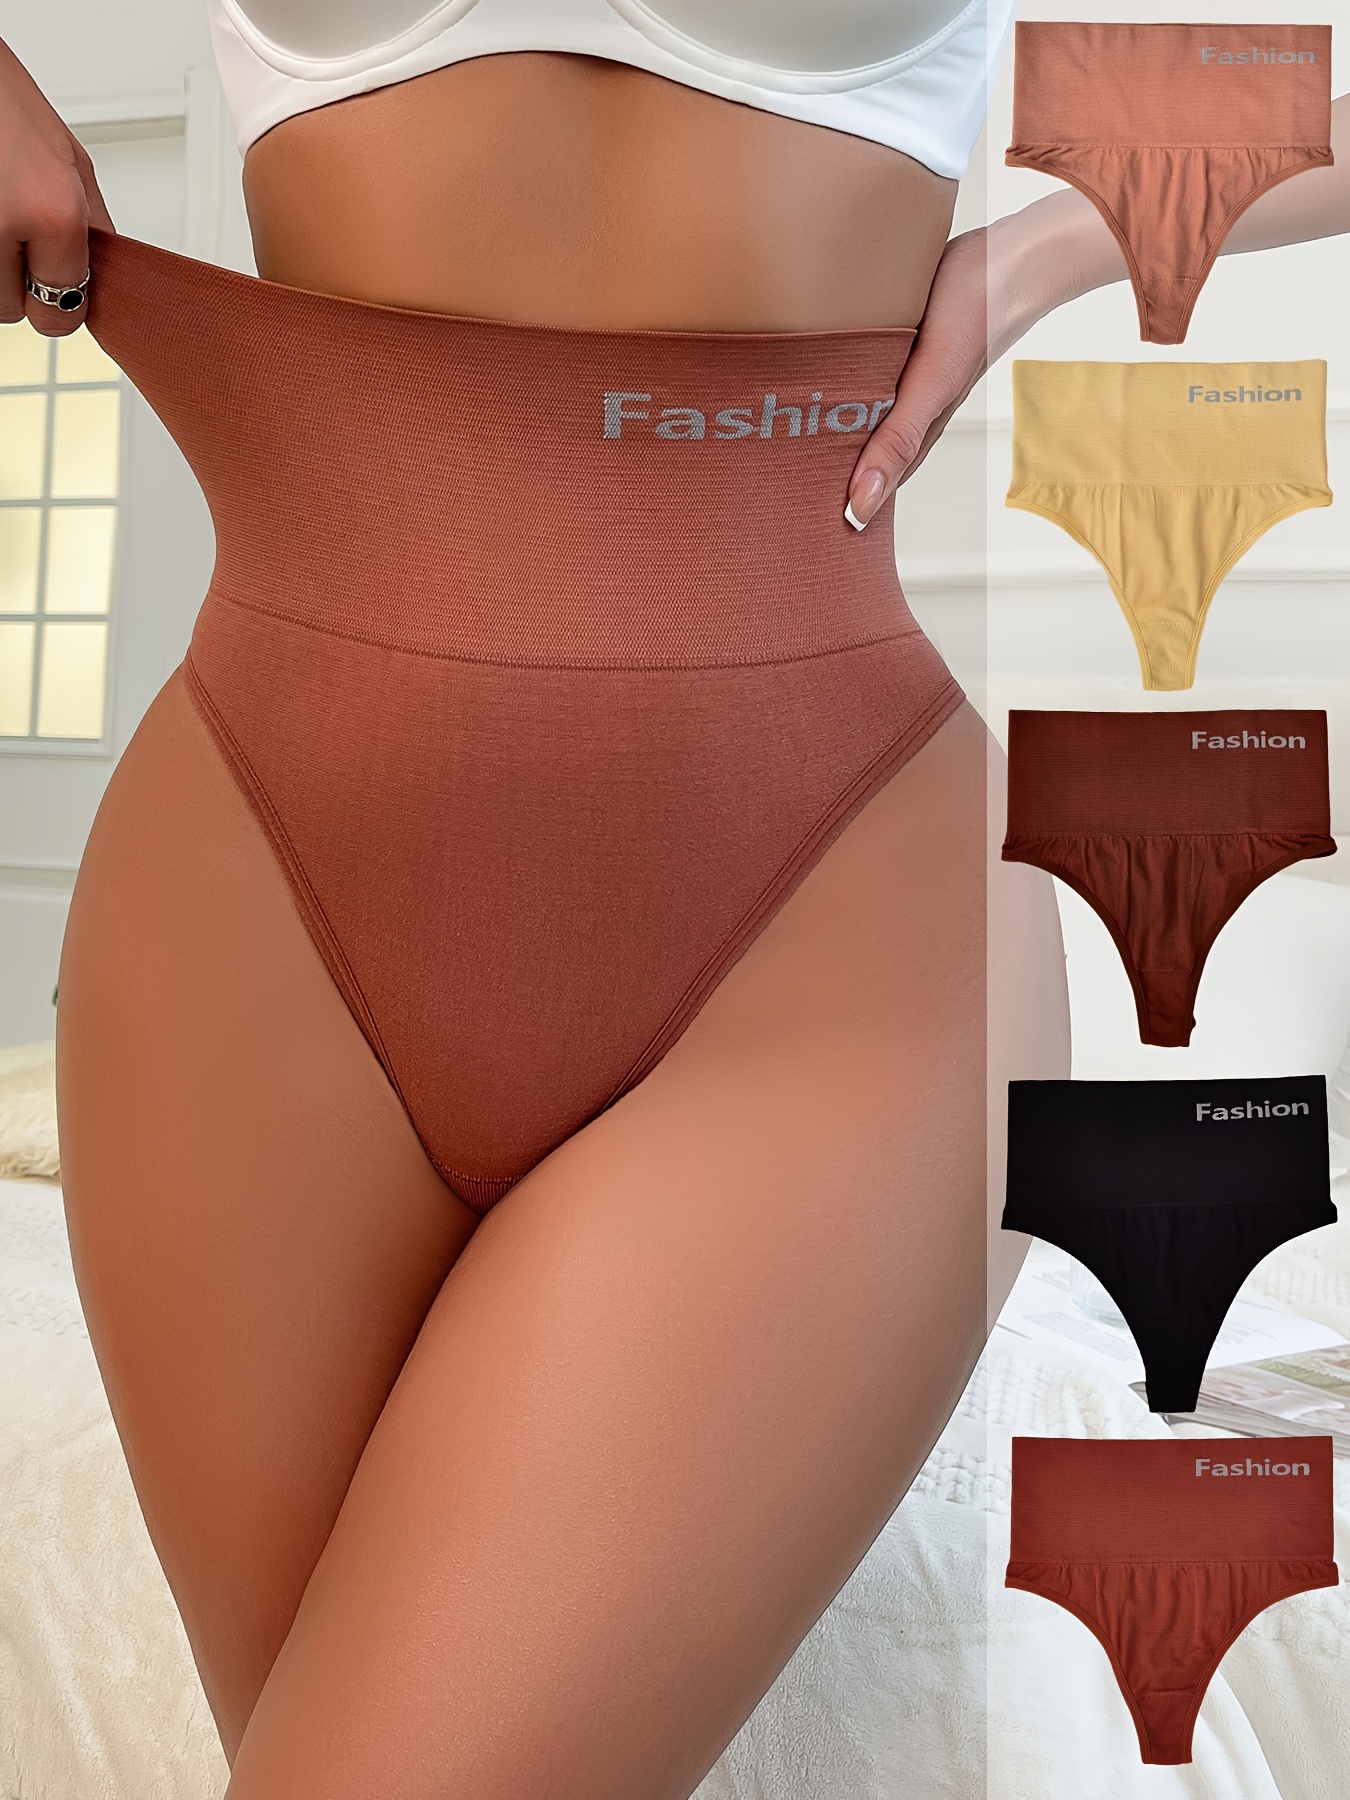 JUNLAN Double Compression Control Panties, Breathable Tummy Control High  Waist Butt Lifter Panties, Women's Lingerie & Underwear